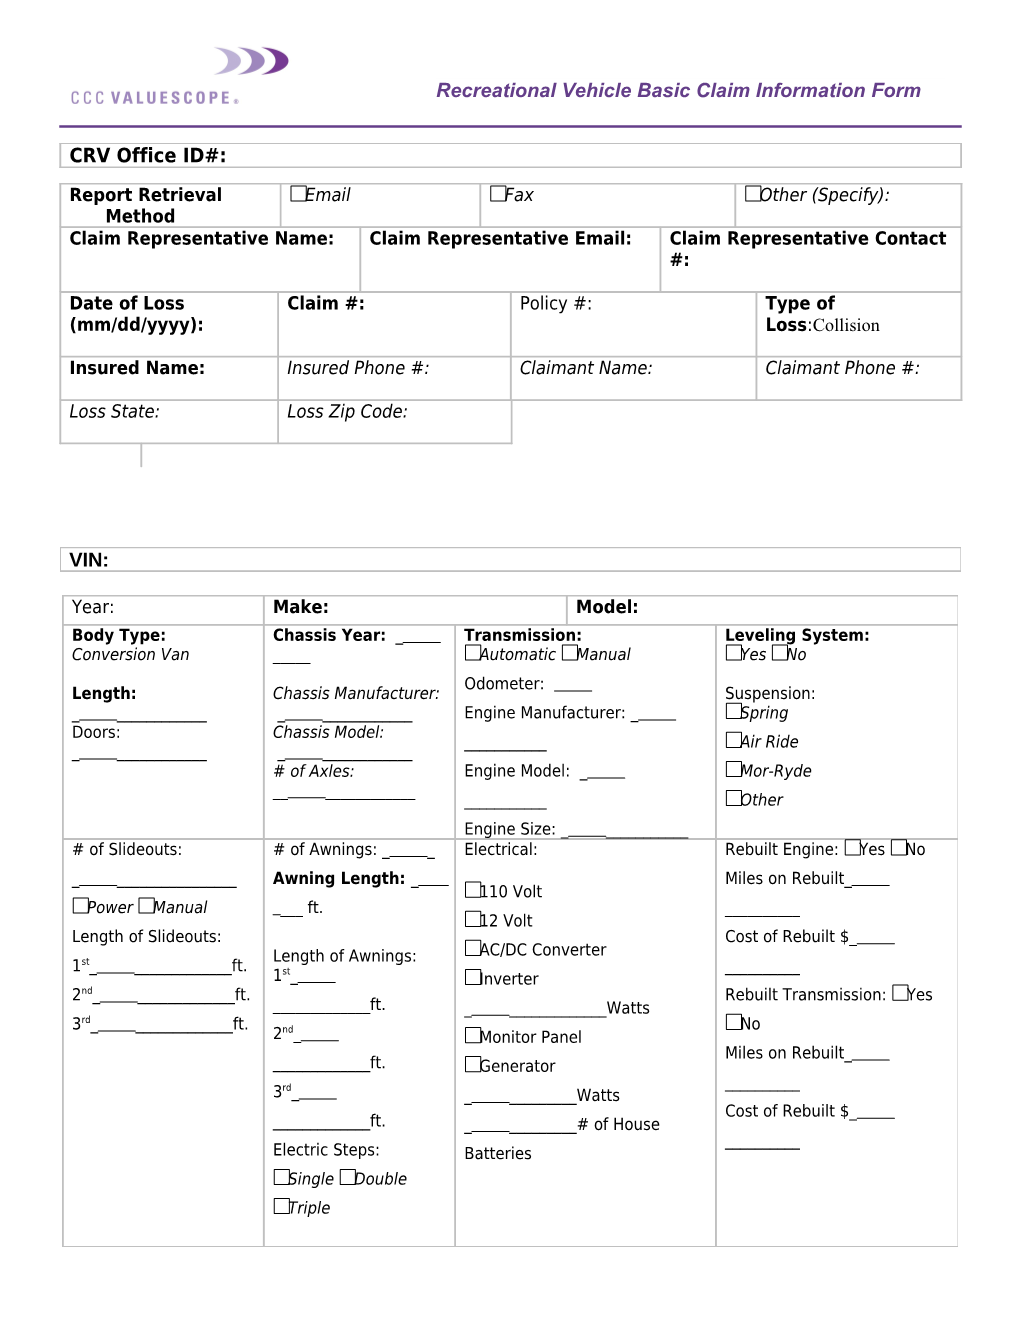 Marine Craft Basic Claim Information Form